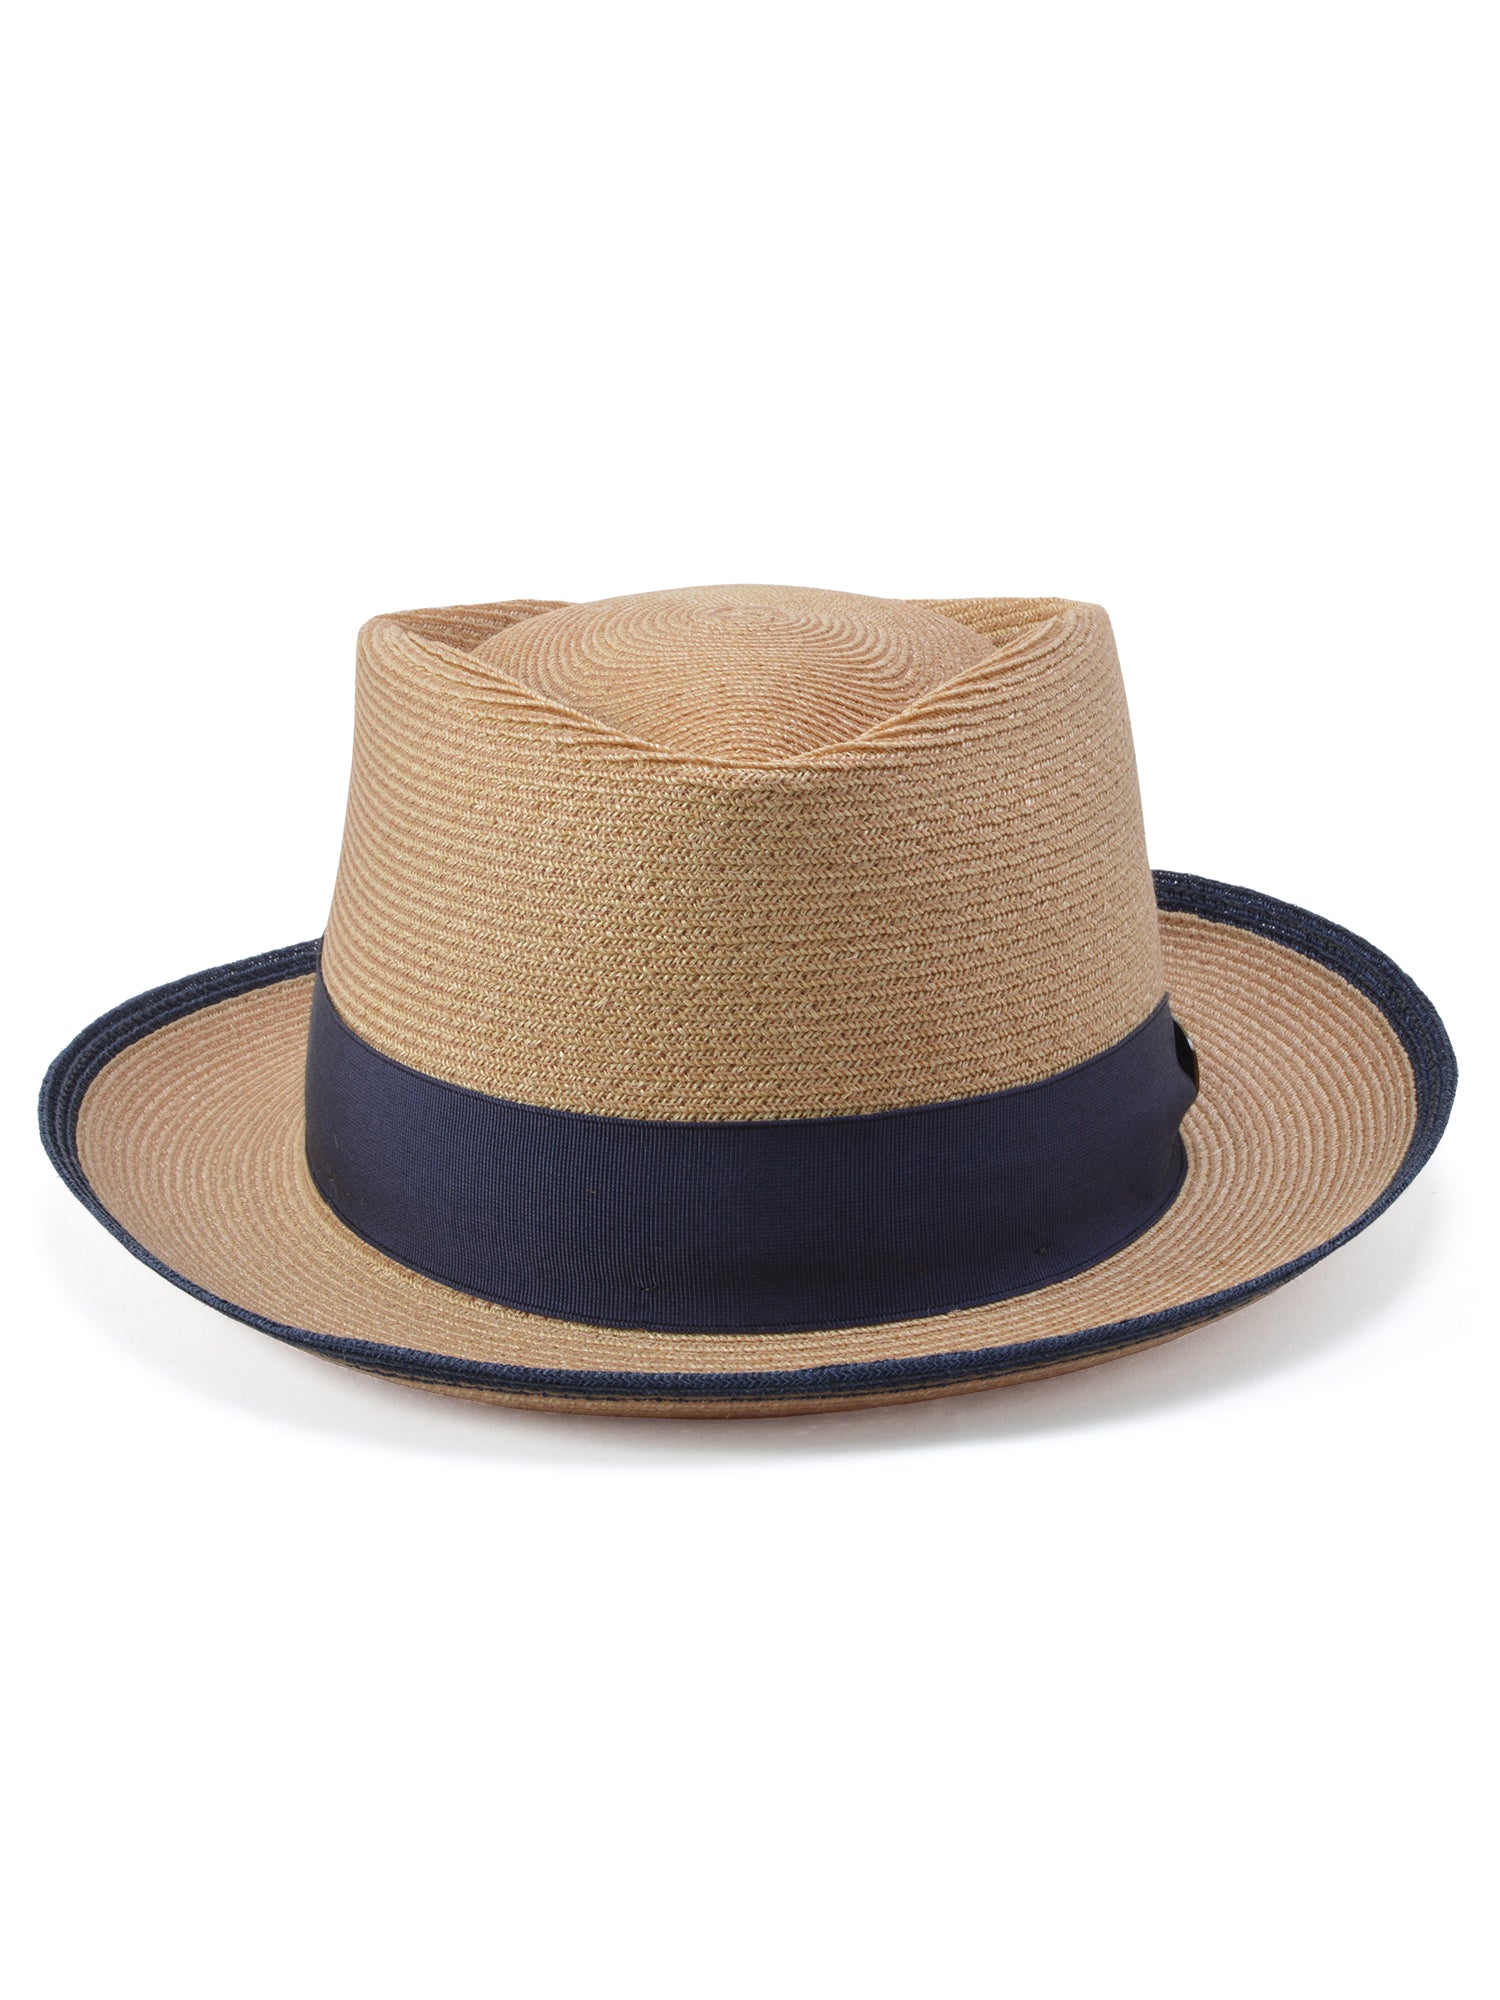 Dobbs The Lineup Hemp Straw Fedora Hat in Beige/Navy